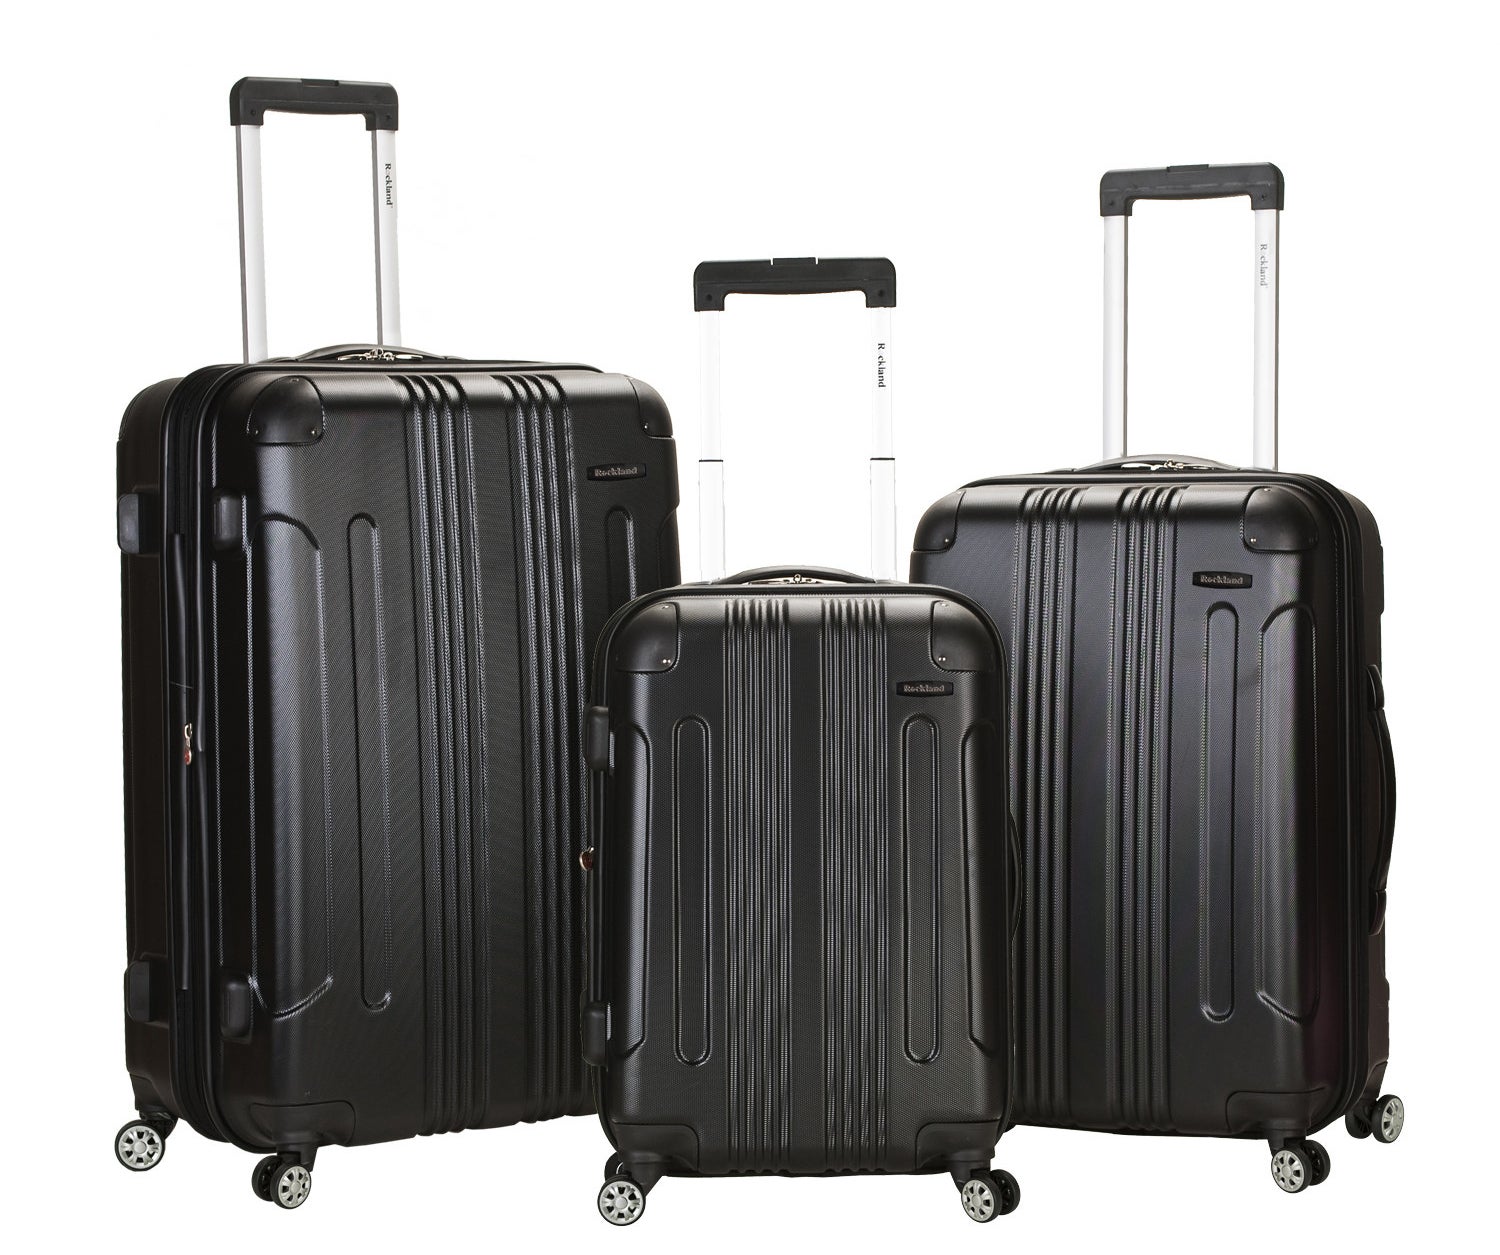 Rockland three-piece luggage set in black